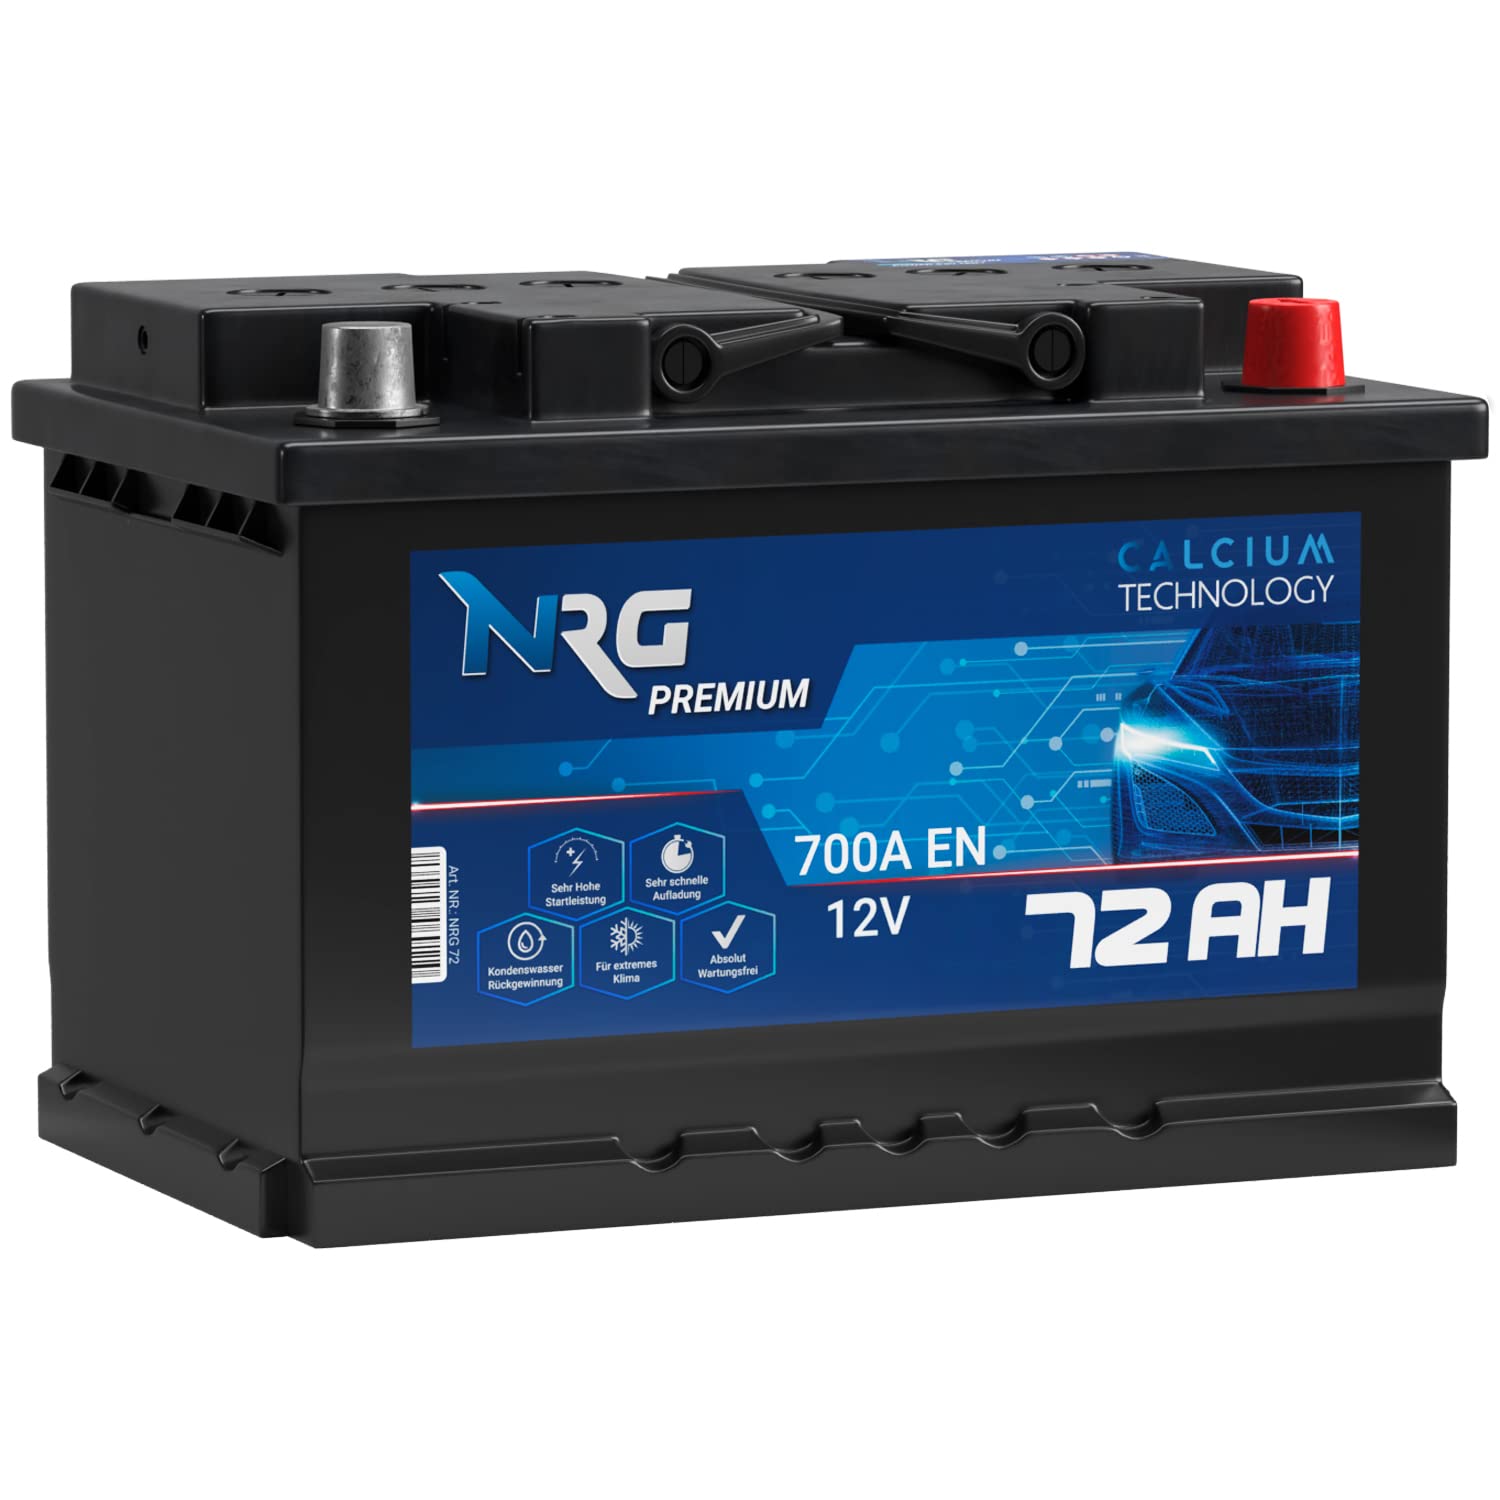 NRG Premium Autobatterie 12V 72AH 700A/EN Batterie ersetzt 65AH 68AH 70AH 74AH 75AH 77AH 80AH von NRG PREMIUM